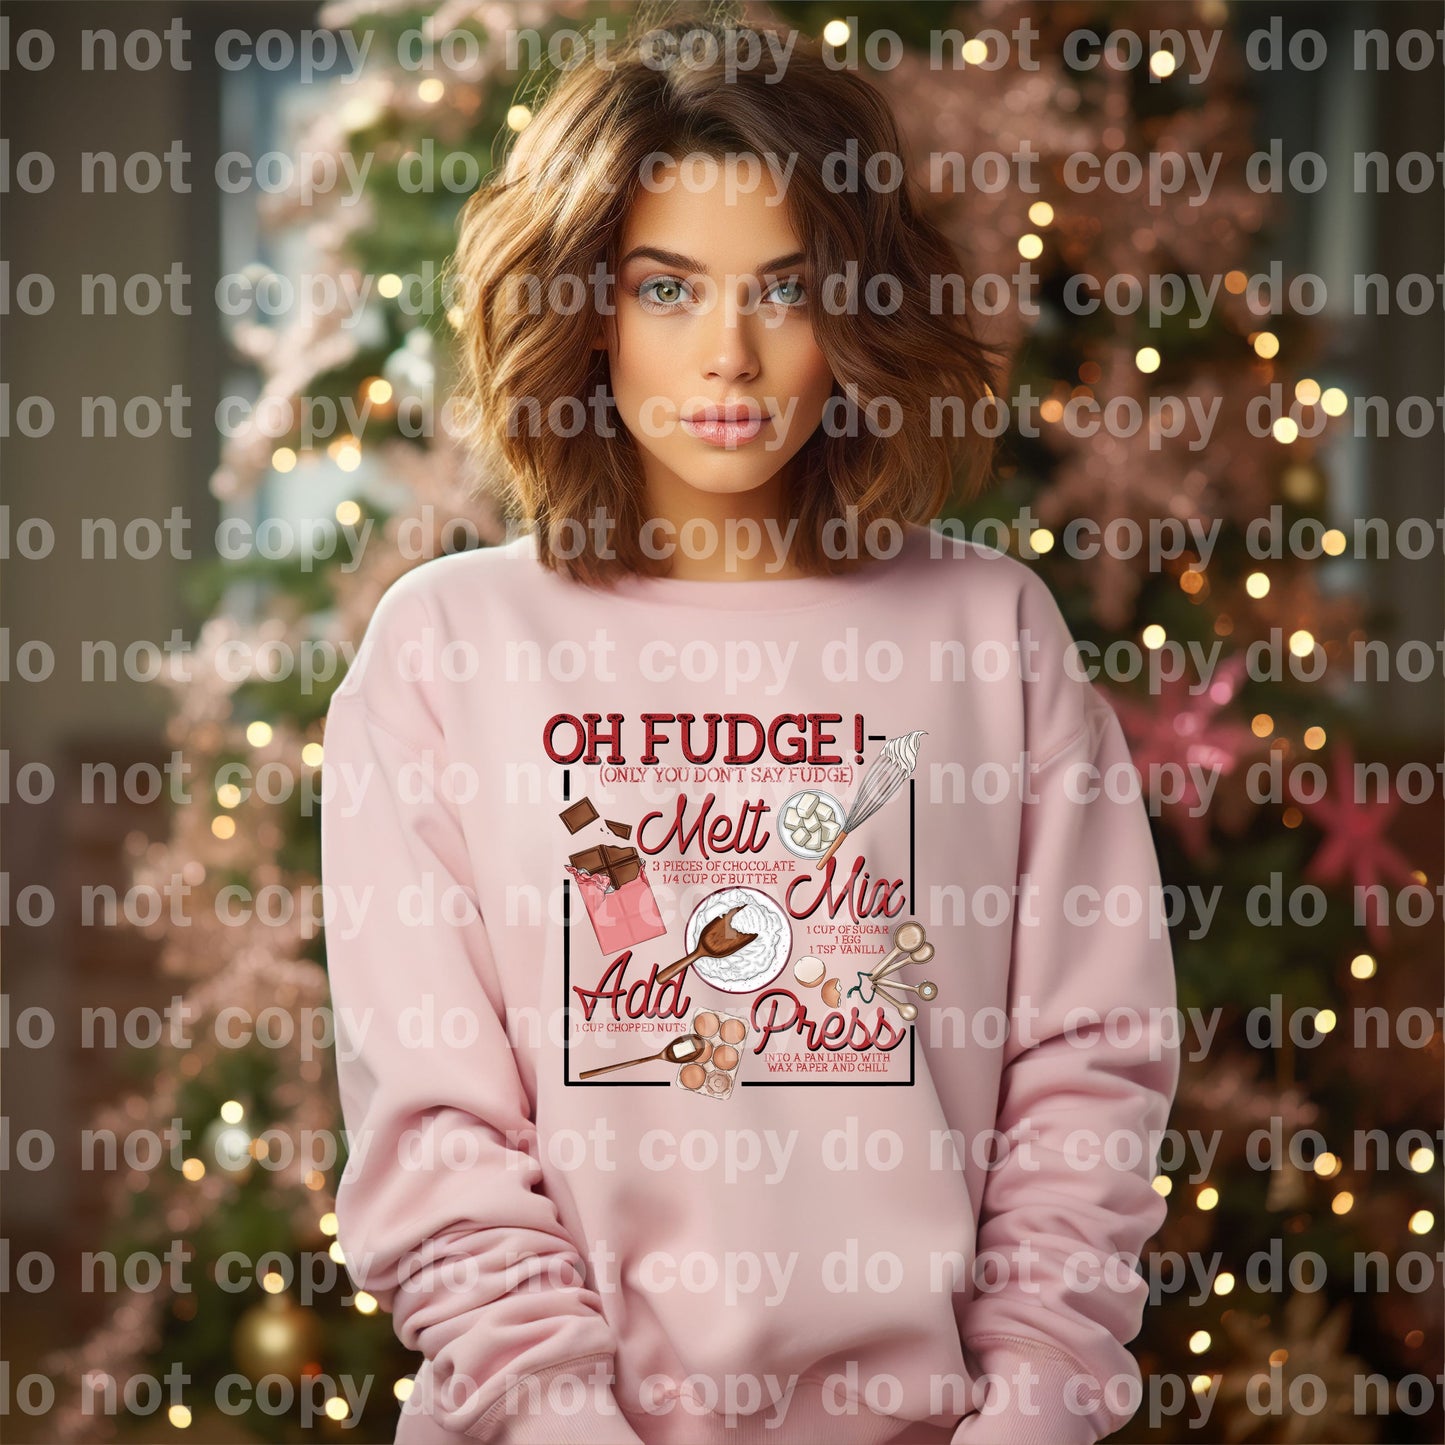 Oh Fudge Christmas Edition Impresión de ensueño o impresión de sublimación